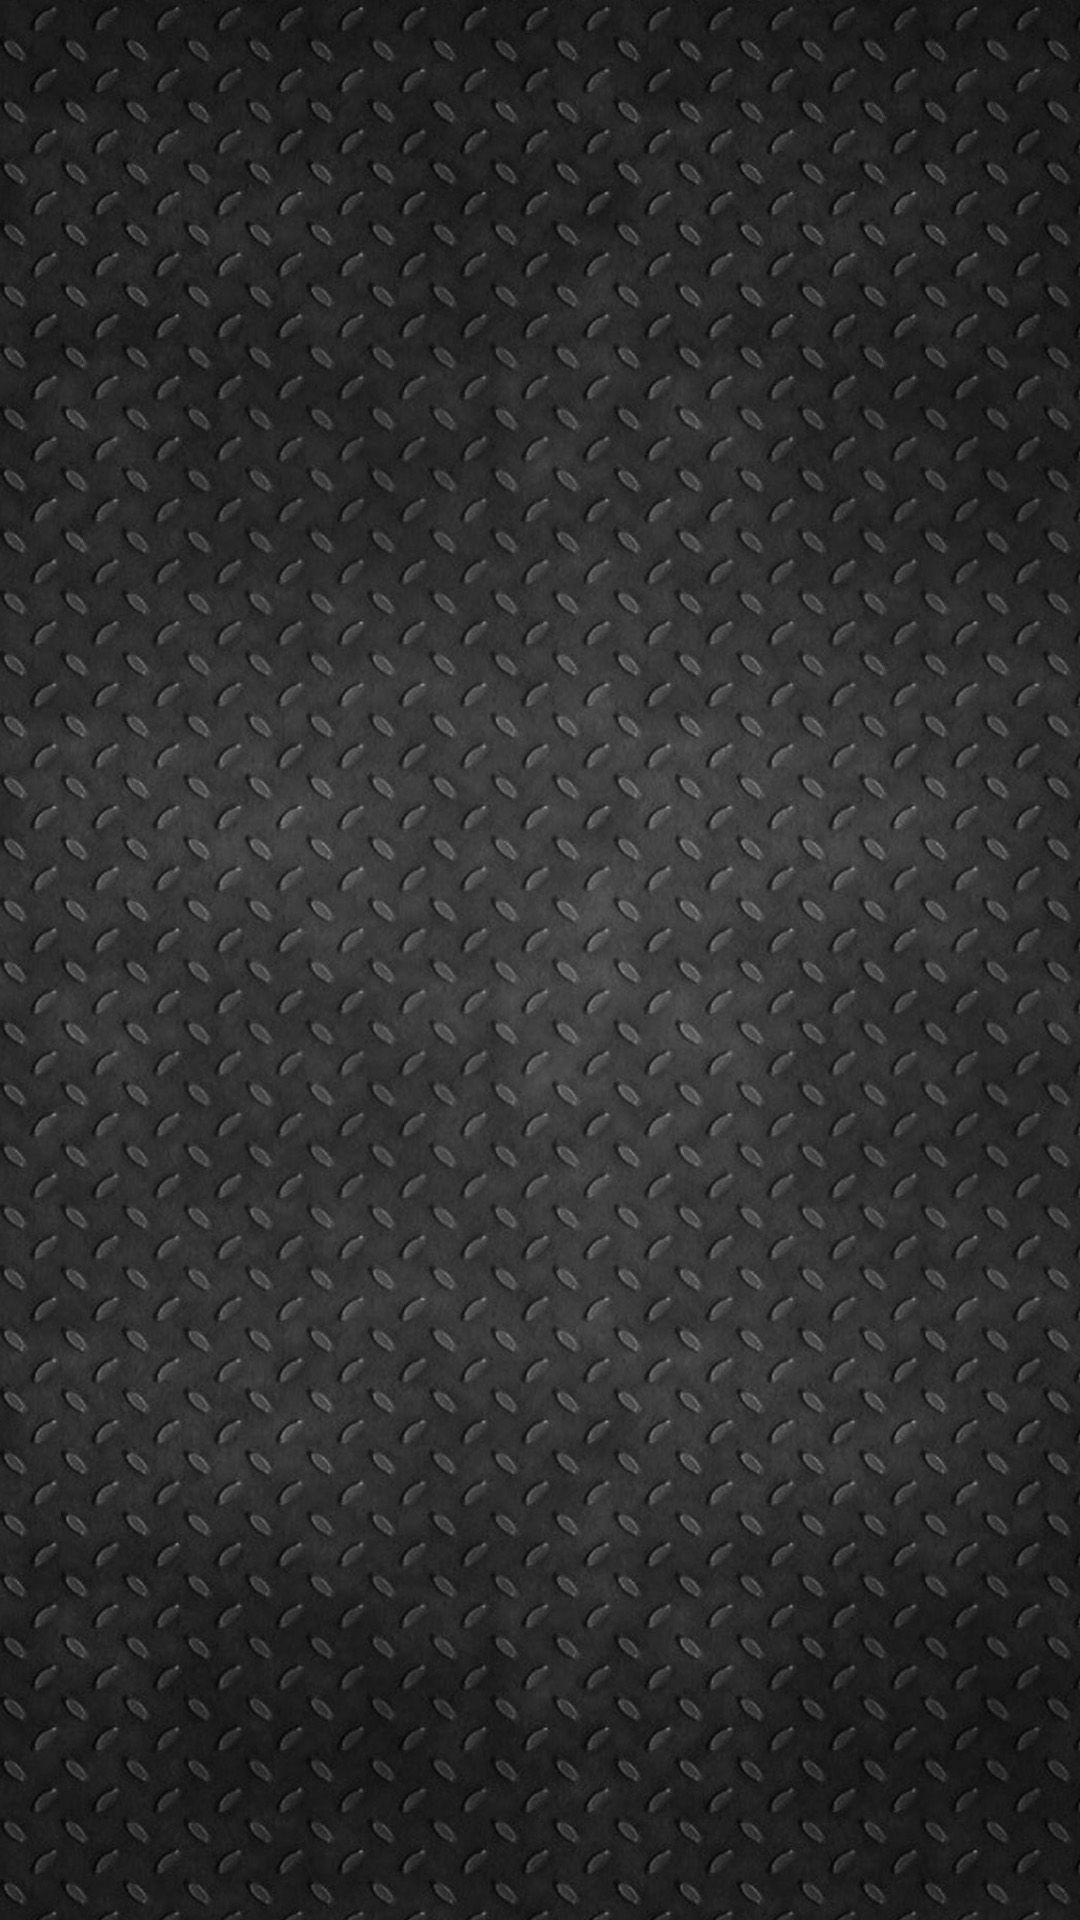 xperia z2 black wallpaper